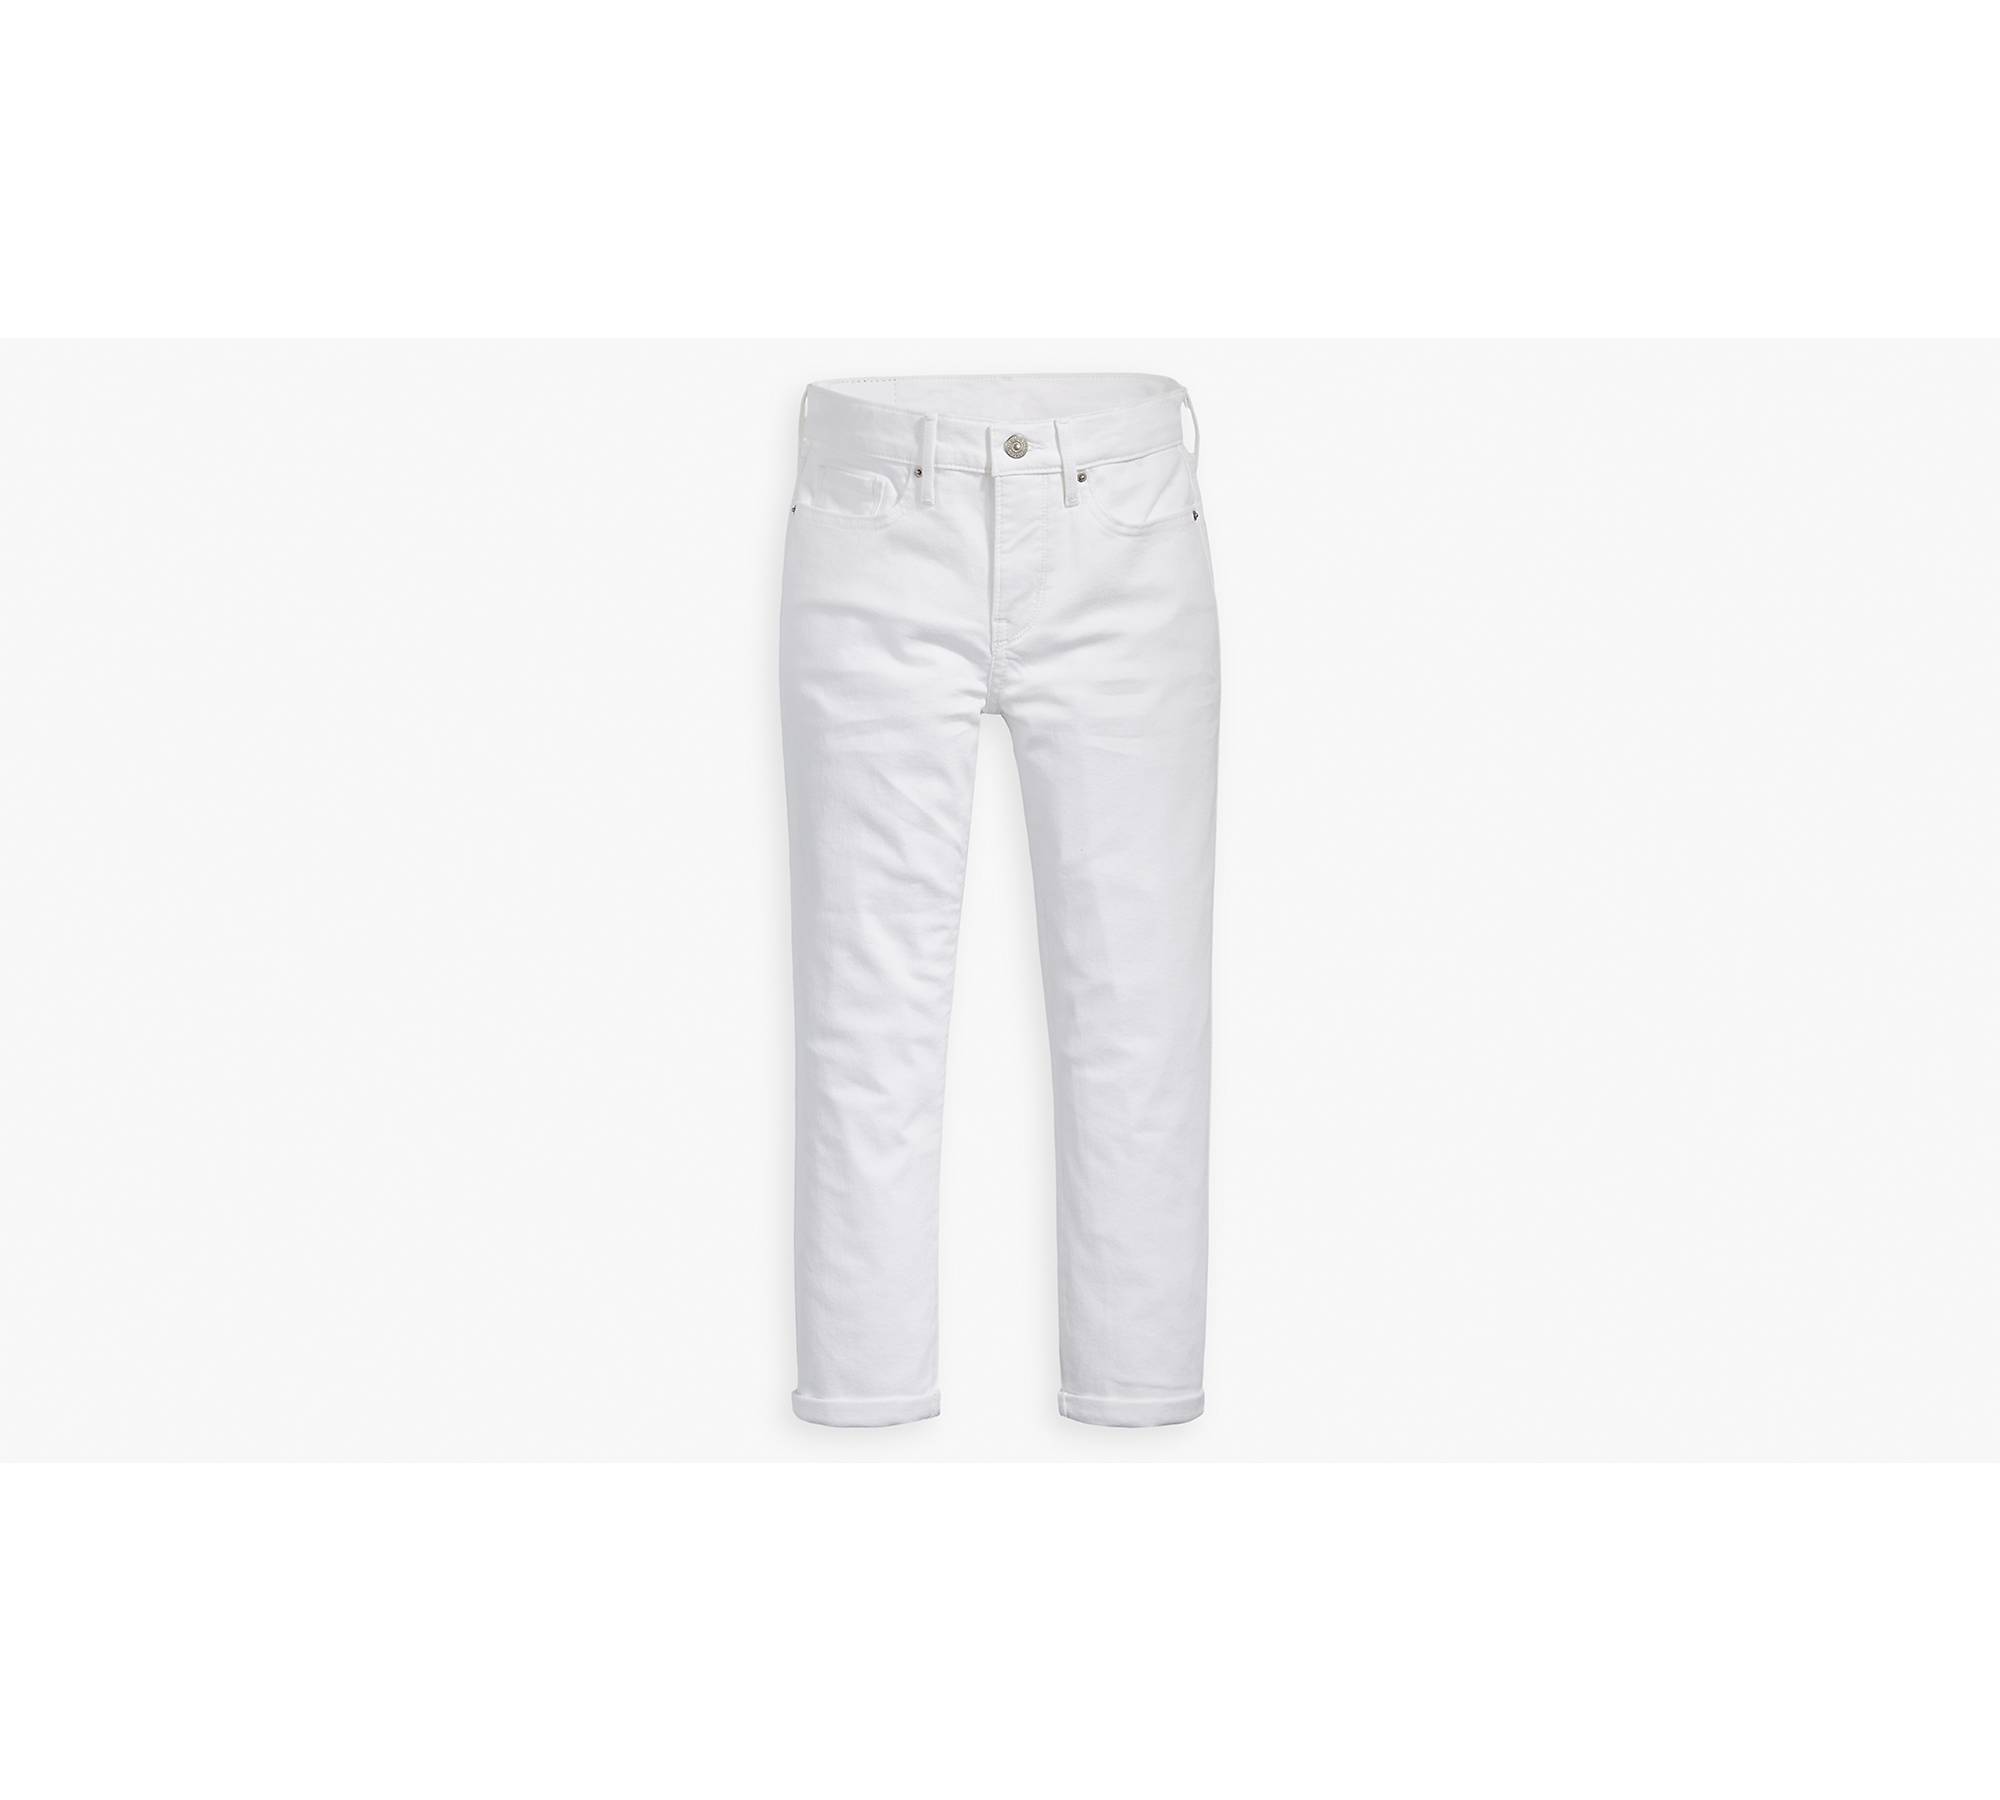 Apt. 9 Capri Jeans Women's 12 White Stretch Denim Waistband Tummy Control  Pants - Helia Beer Co